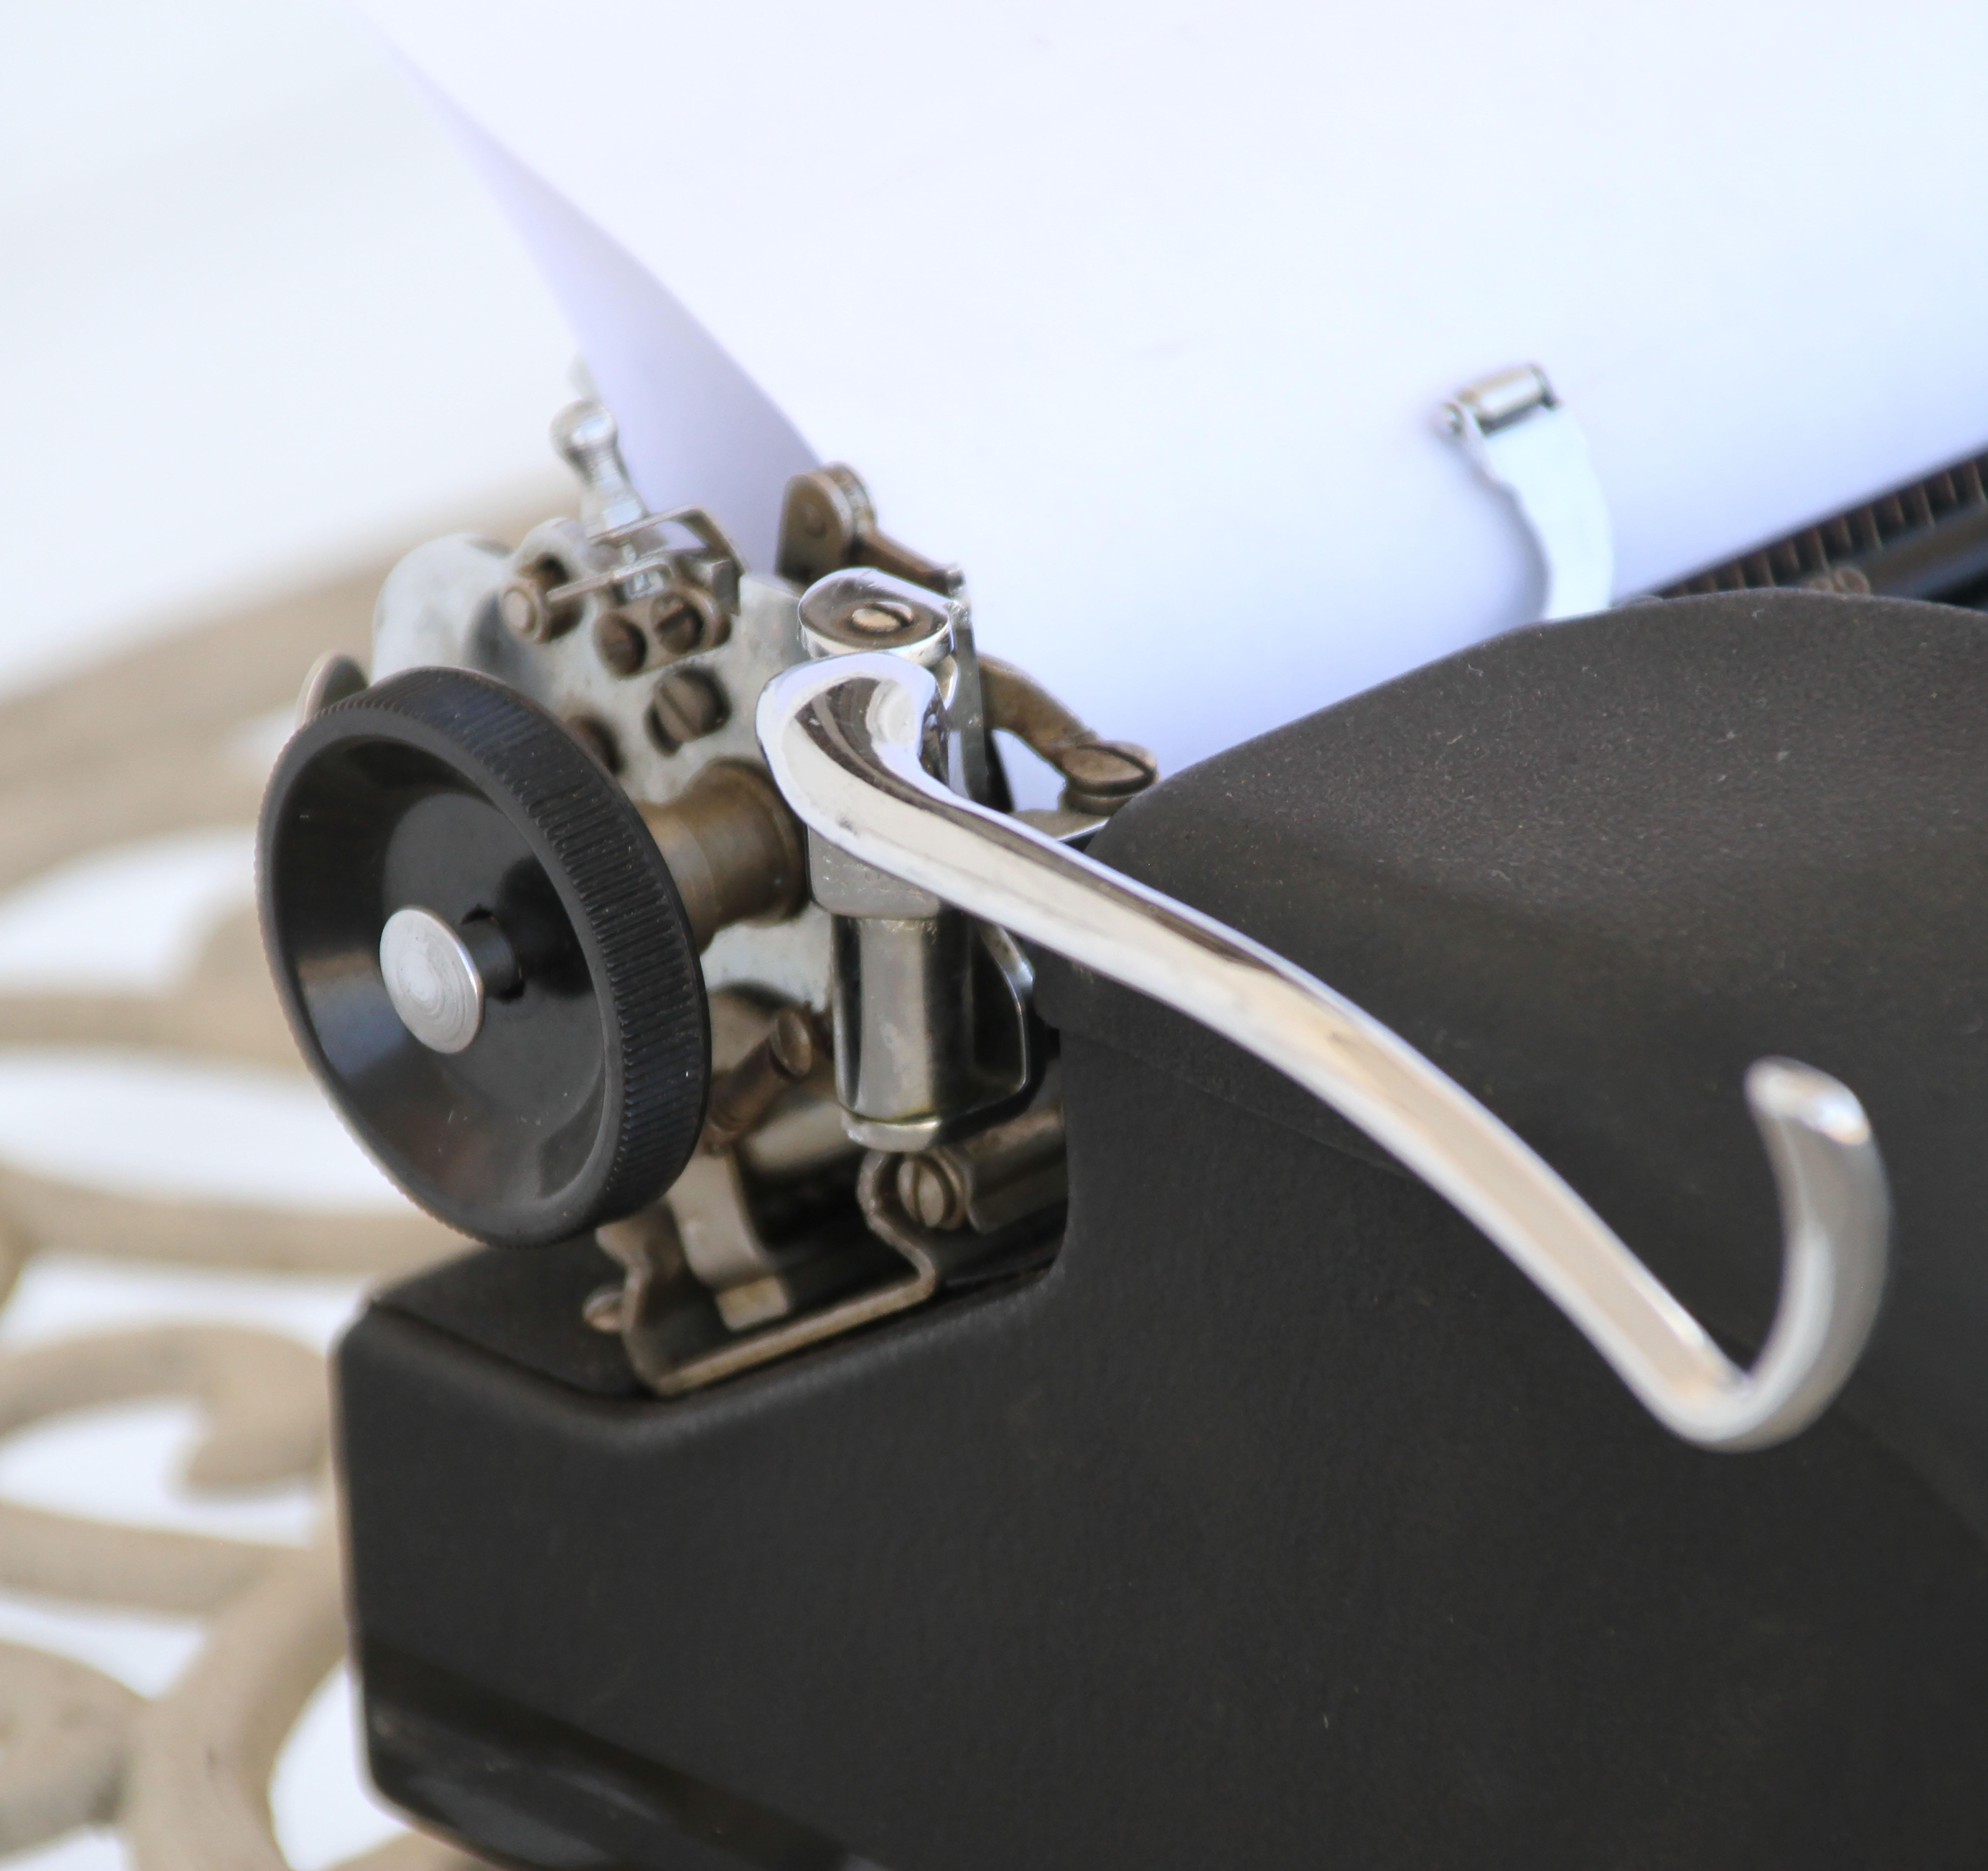 juwel model 3 typewriter for sale